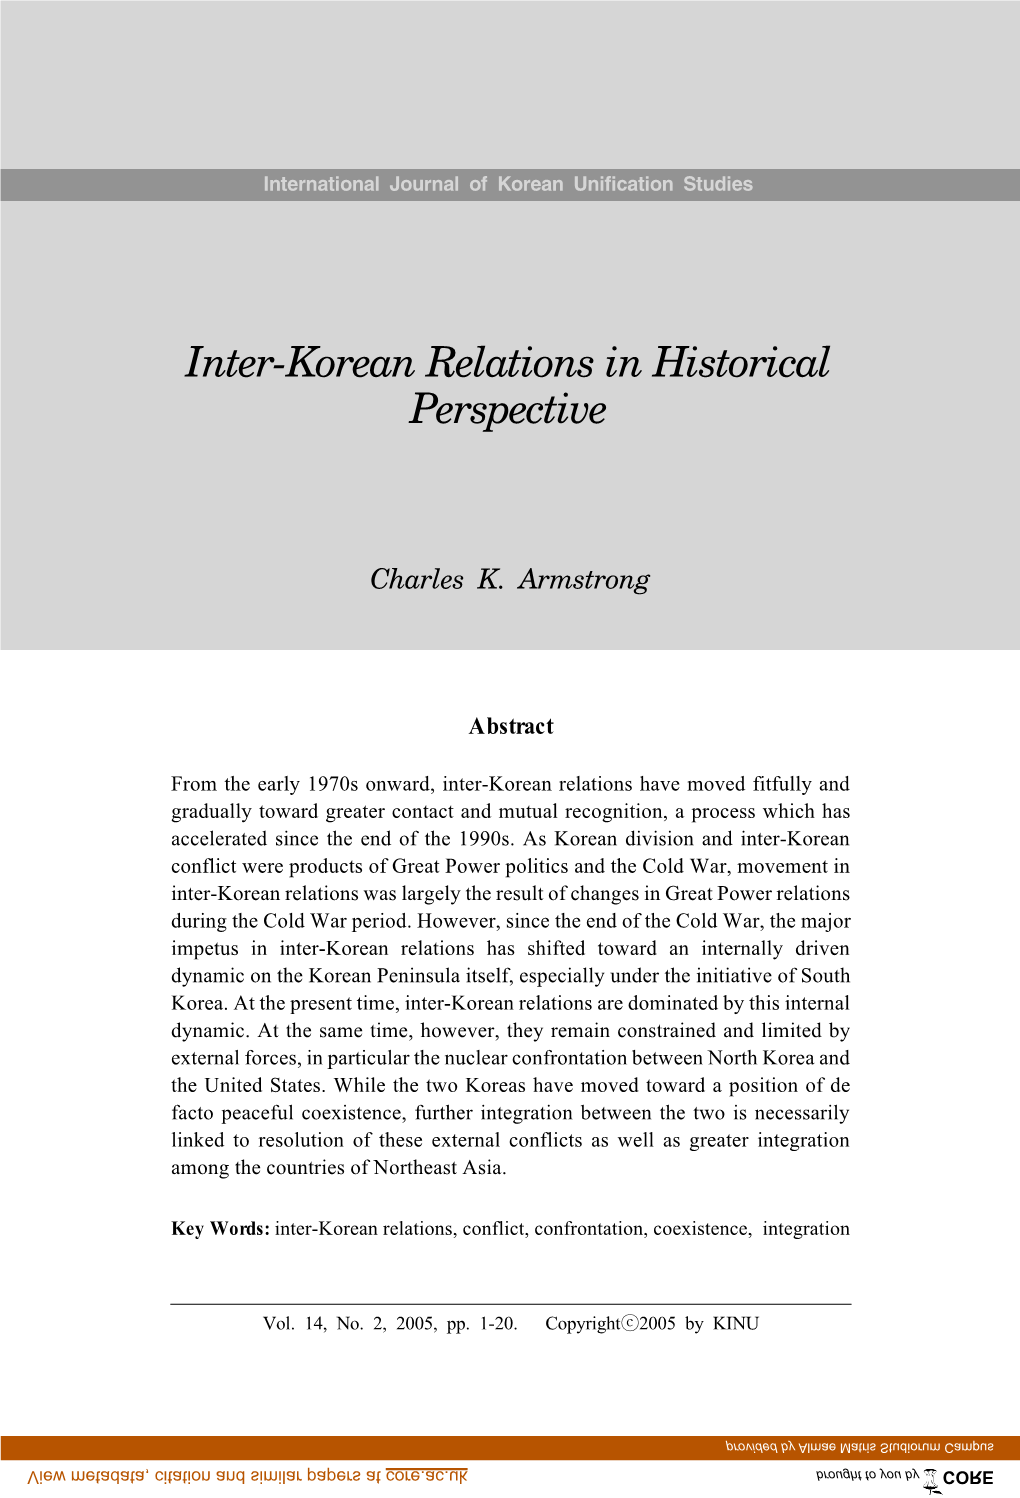 Inter-Korean Relations in Historical Perspective